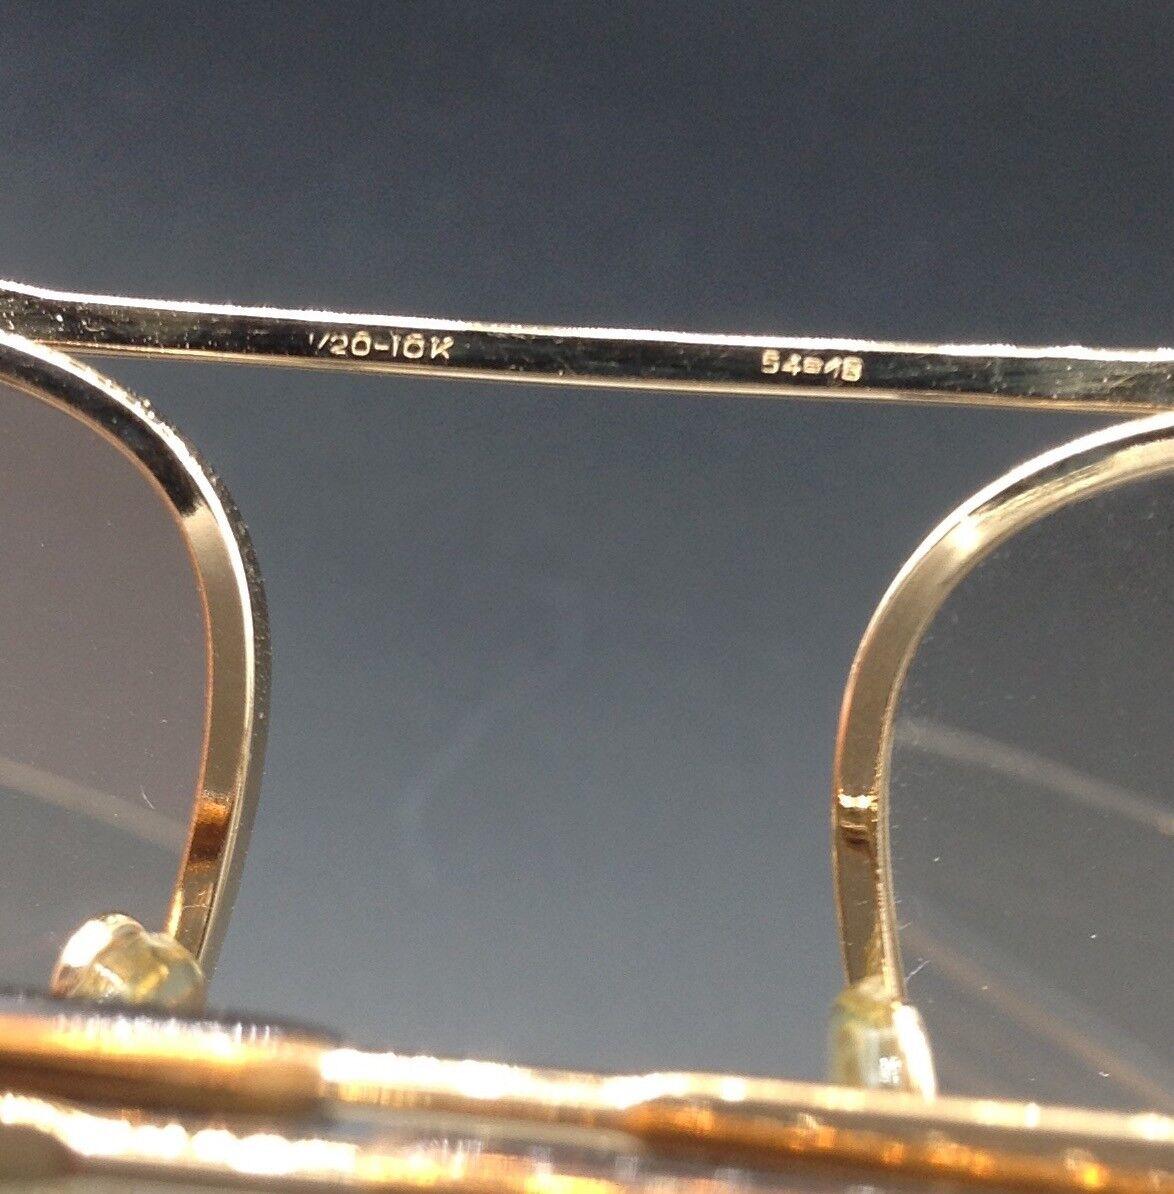 Ray Ban Bausch&Lomb B&L 1/20-10k gold laminated Vintage oro laminato gold frame eyewear